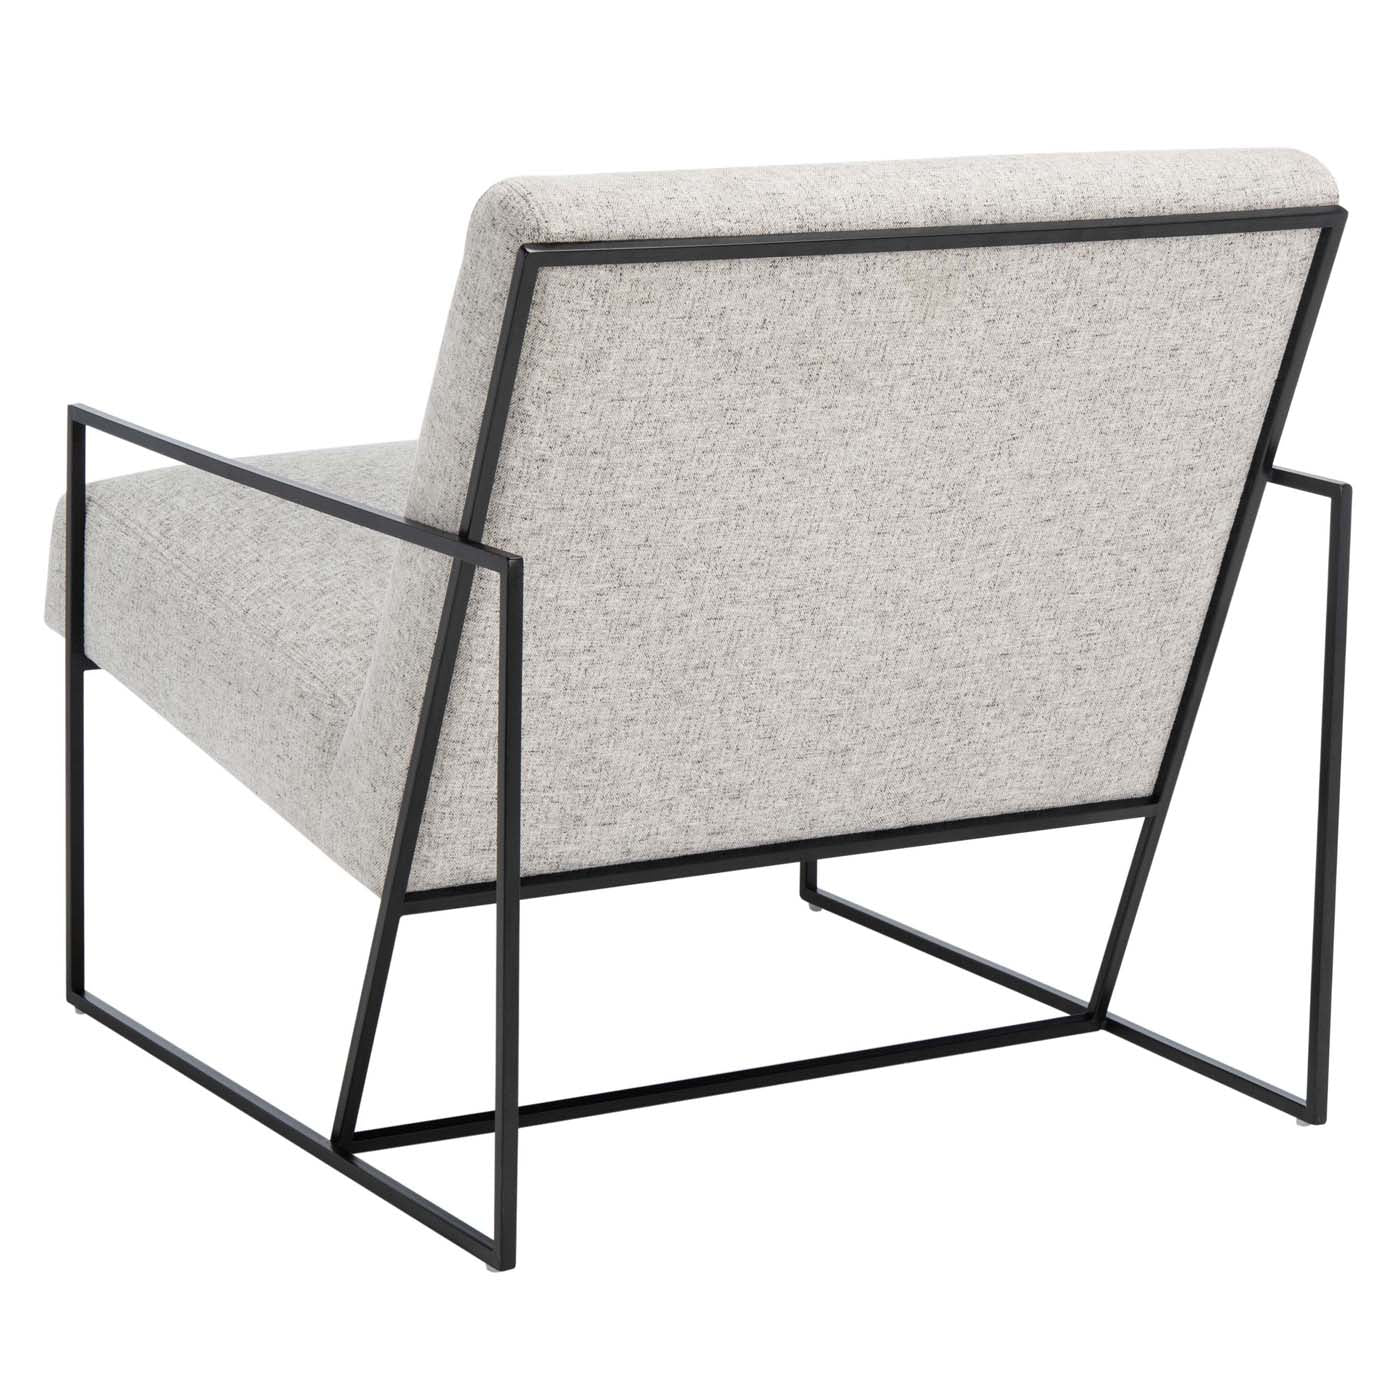 Safavieh Atheris Arm Chair , ACH5200 - Light Grey / Black